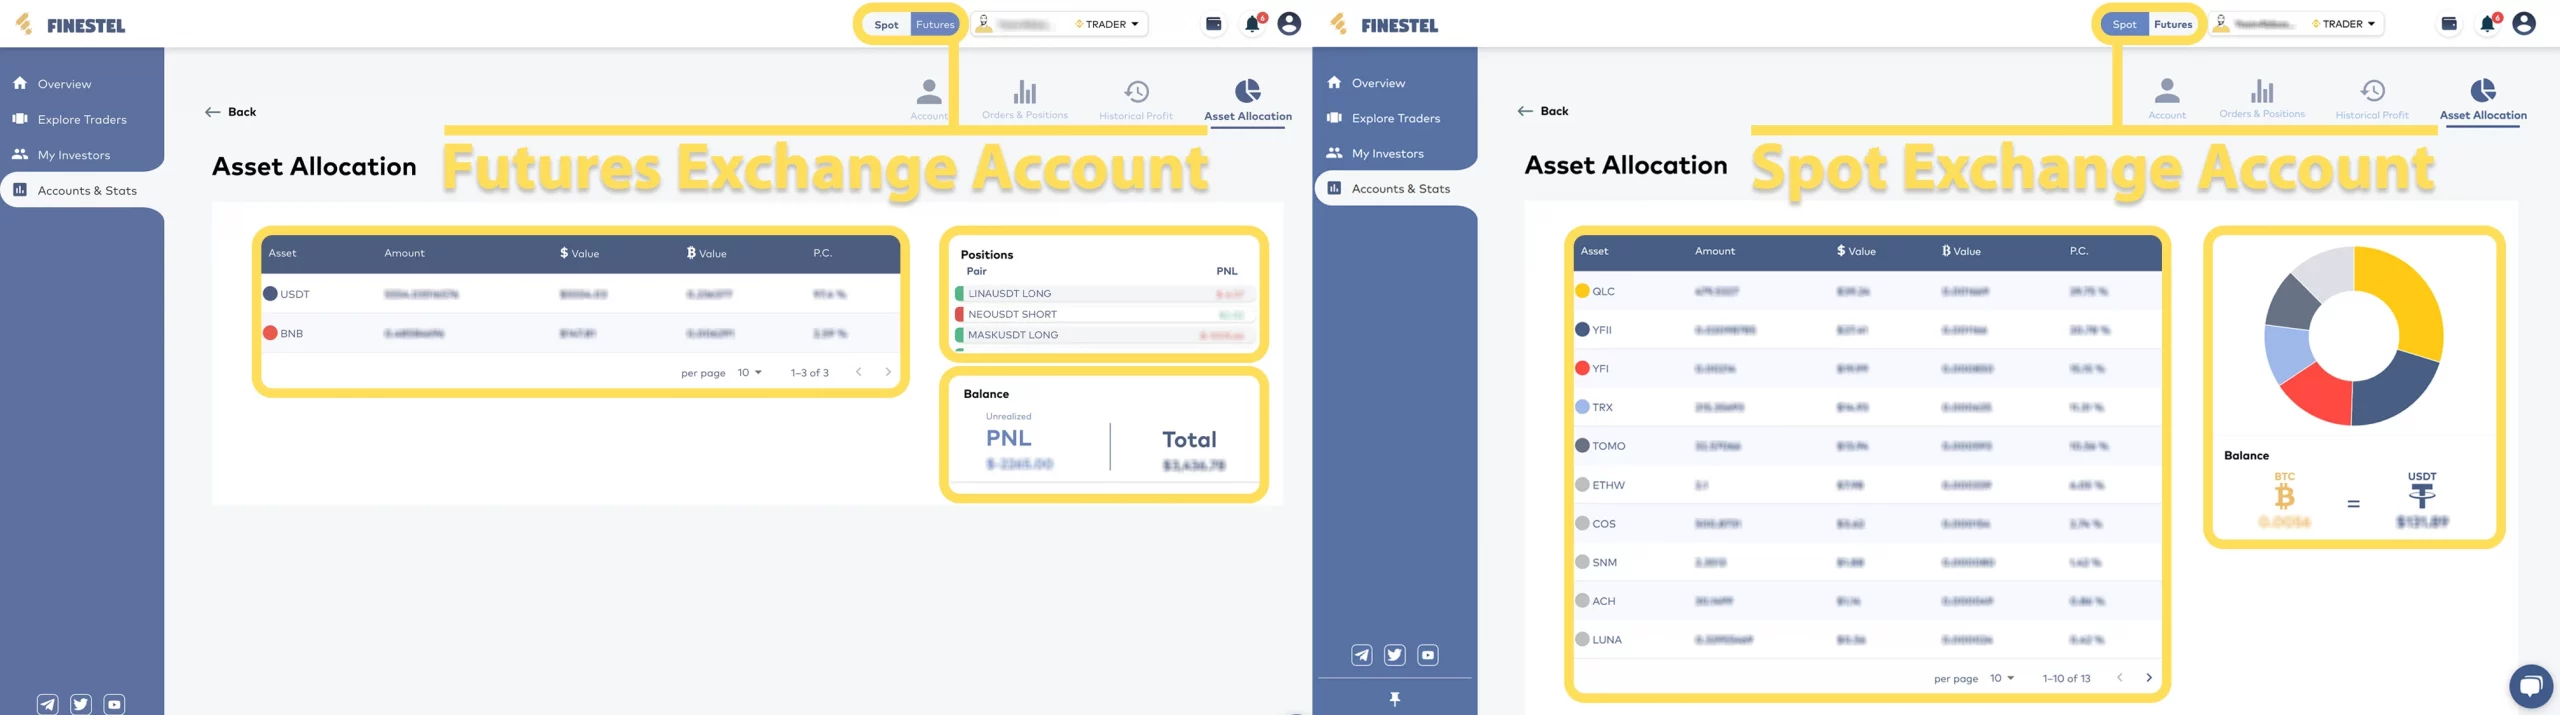 Finestel's portfolio tracker futures and spot exchange accounts asset allocations